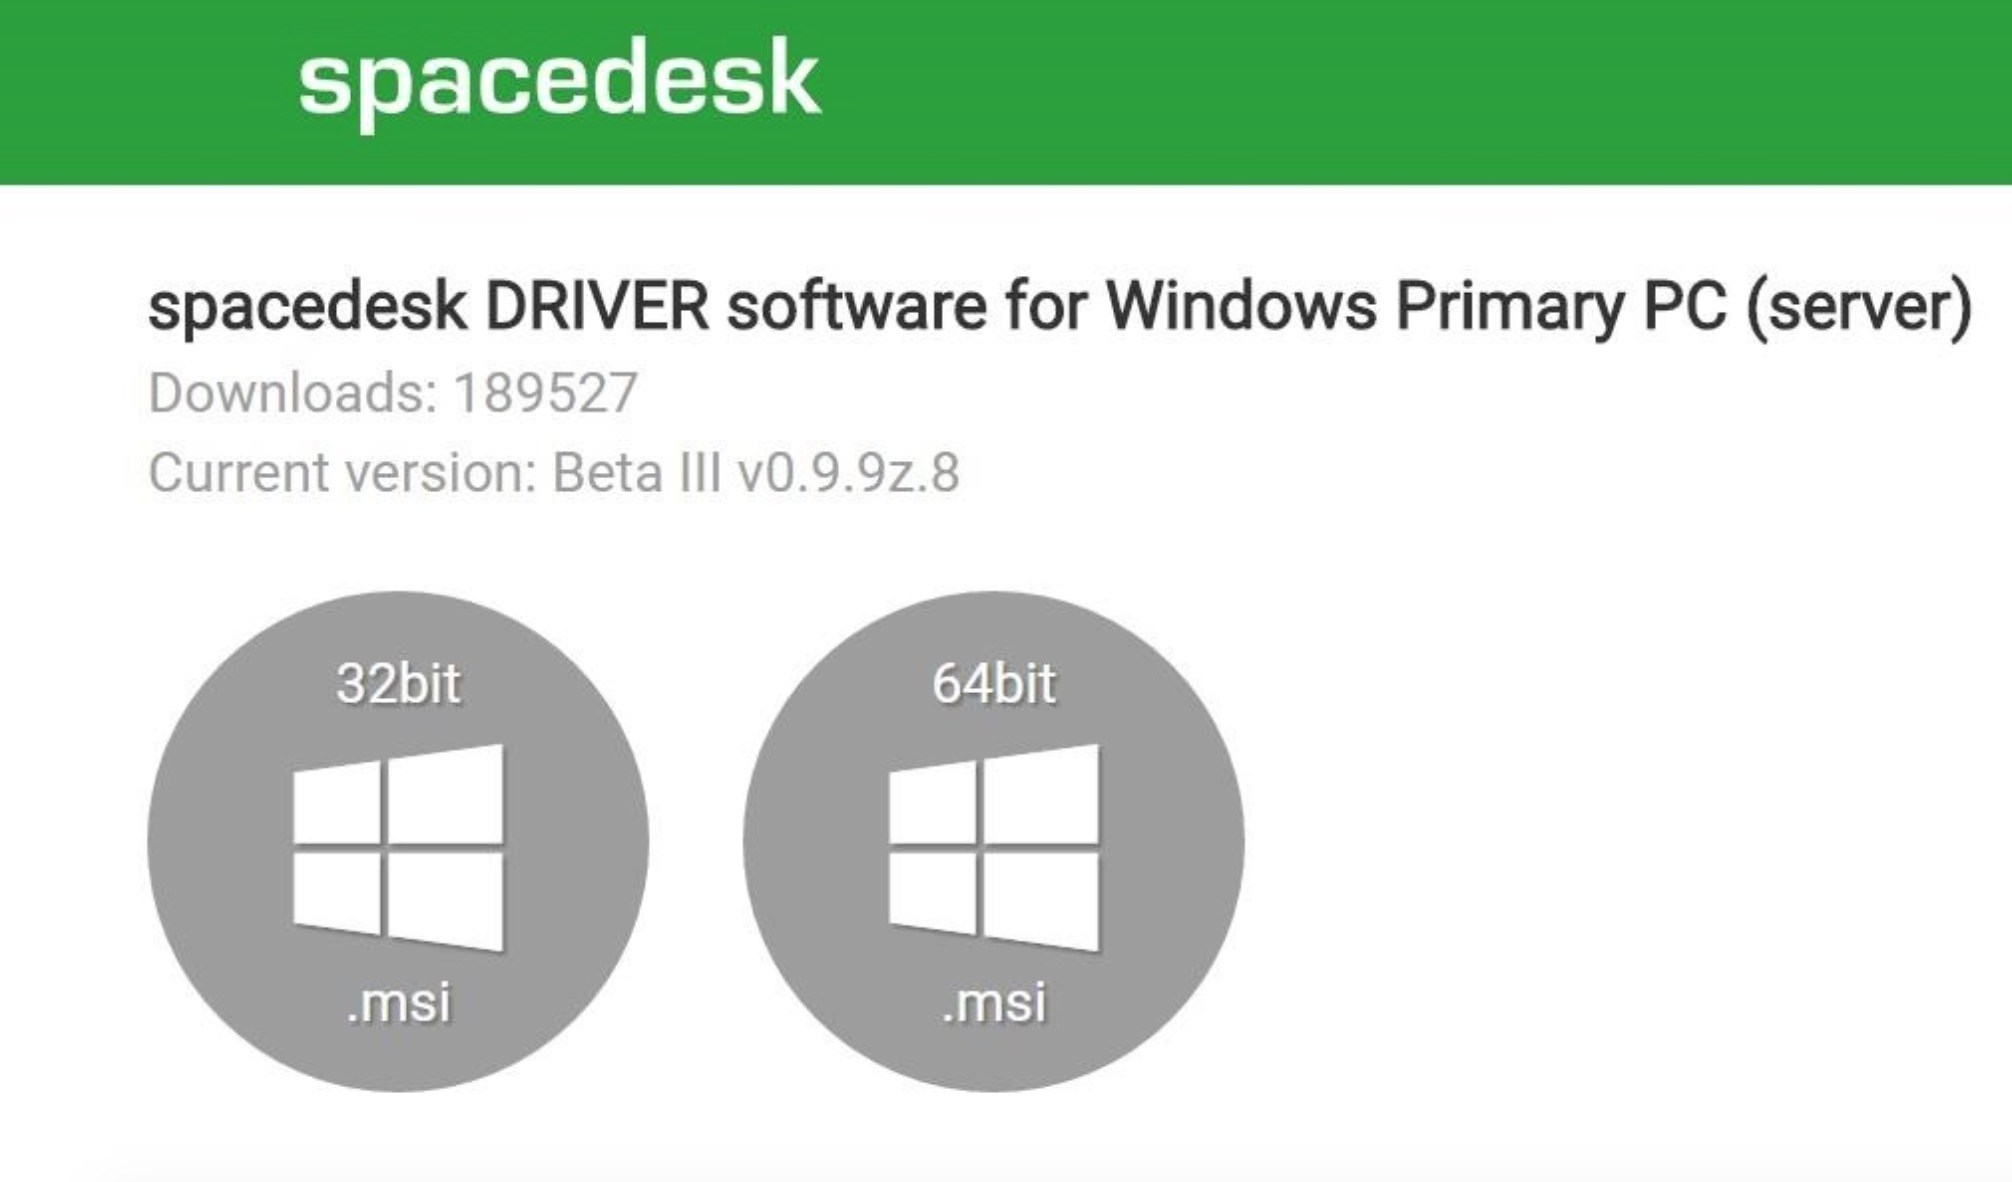 spacedesk windows driver